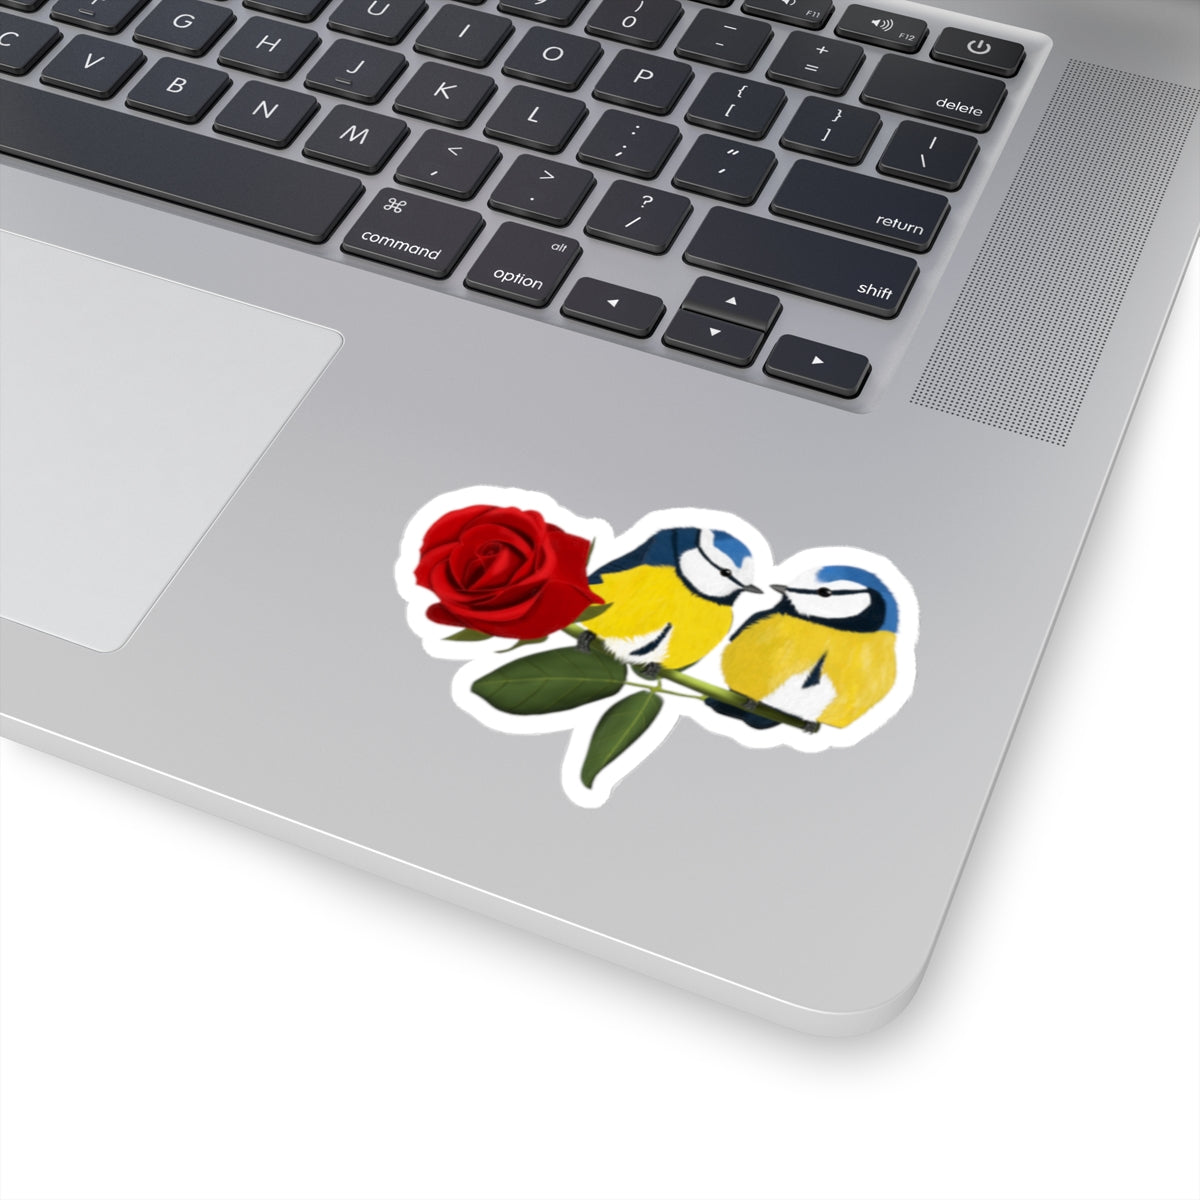 Blue Titmouse on a Rose Valentine's Day Bird Kiss-Cut Sticker